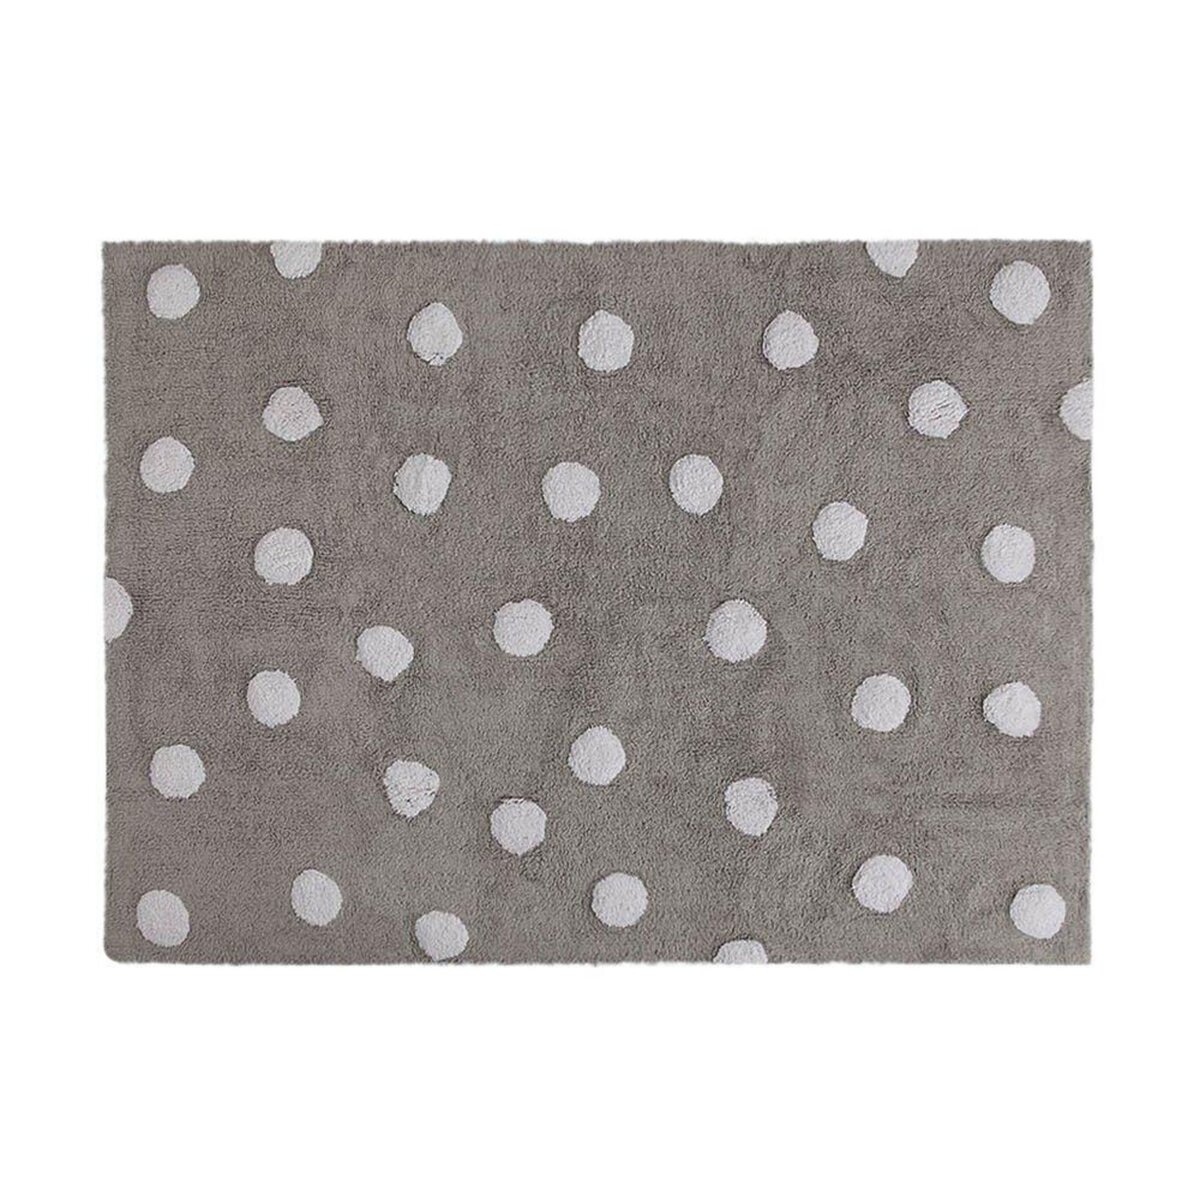 Lorena Canals Tapis coton motif pois - gris - 120 x 160